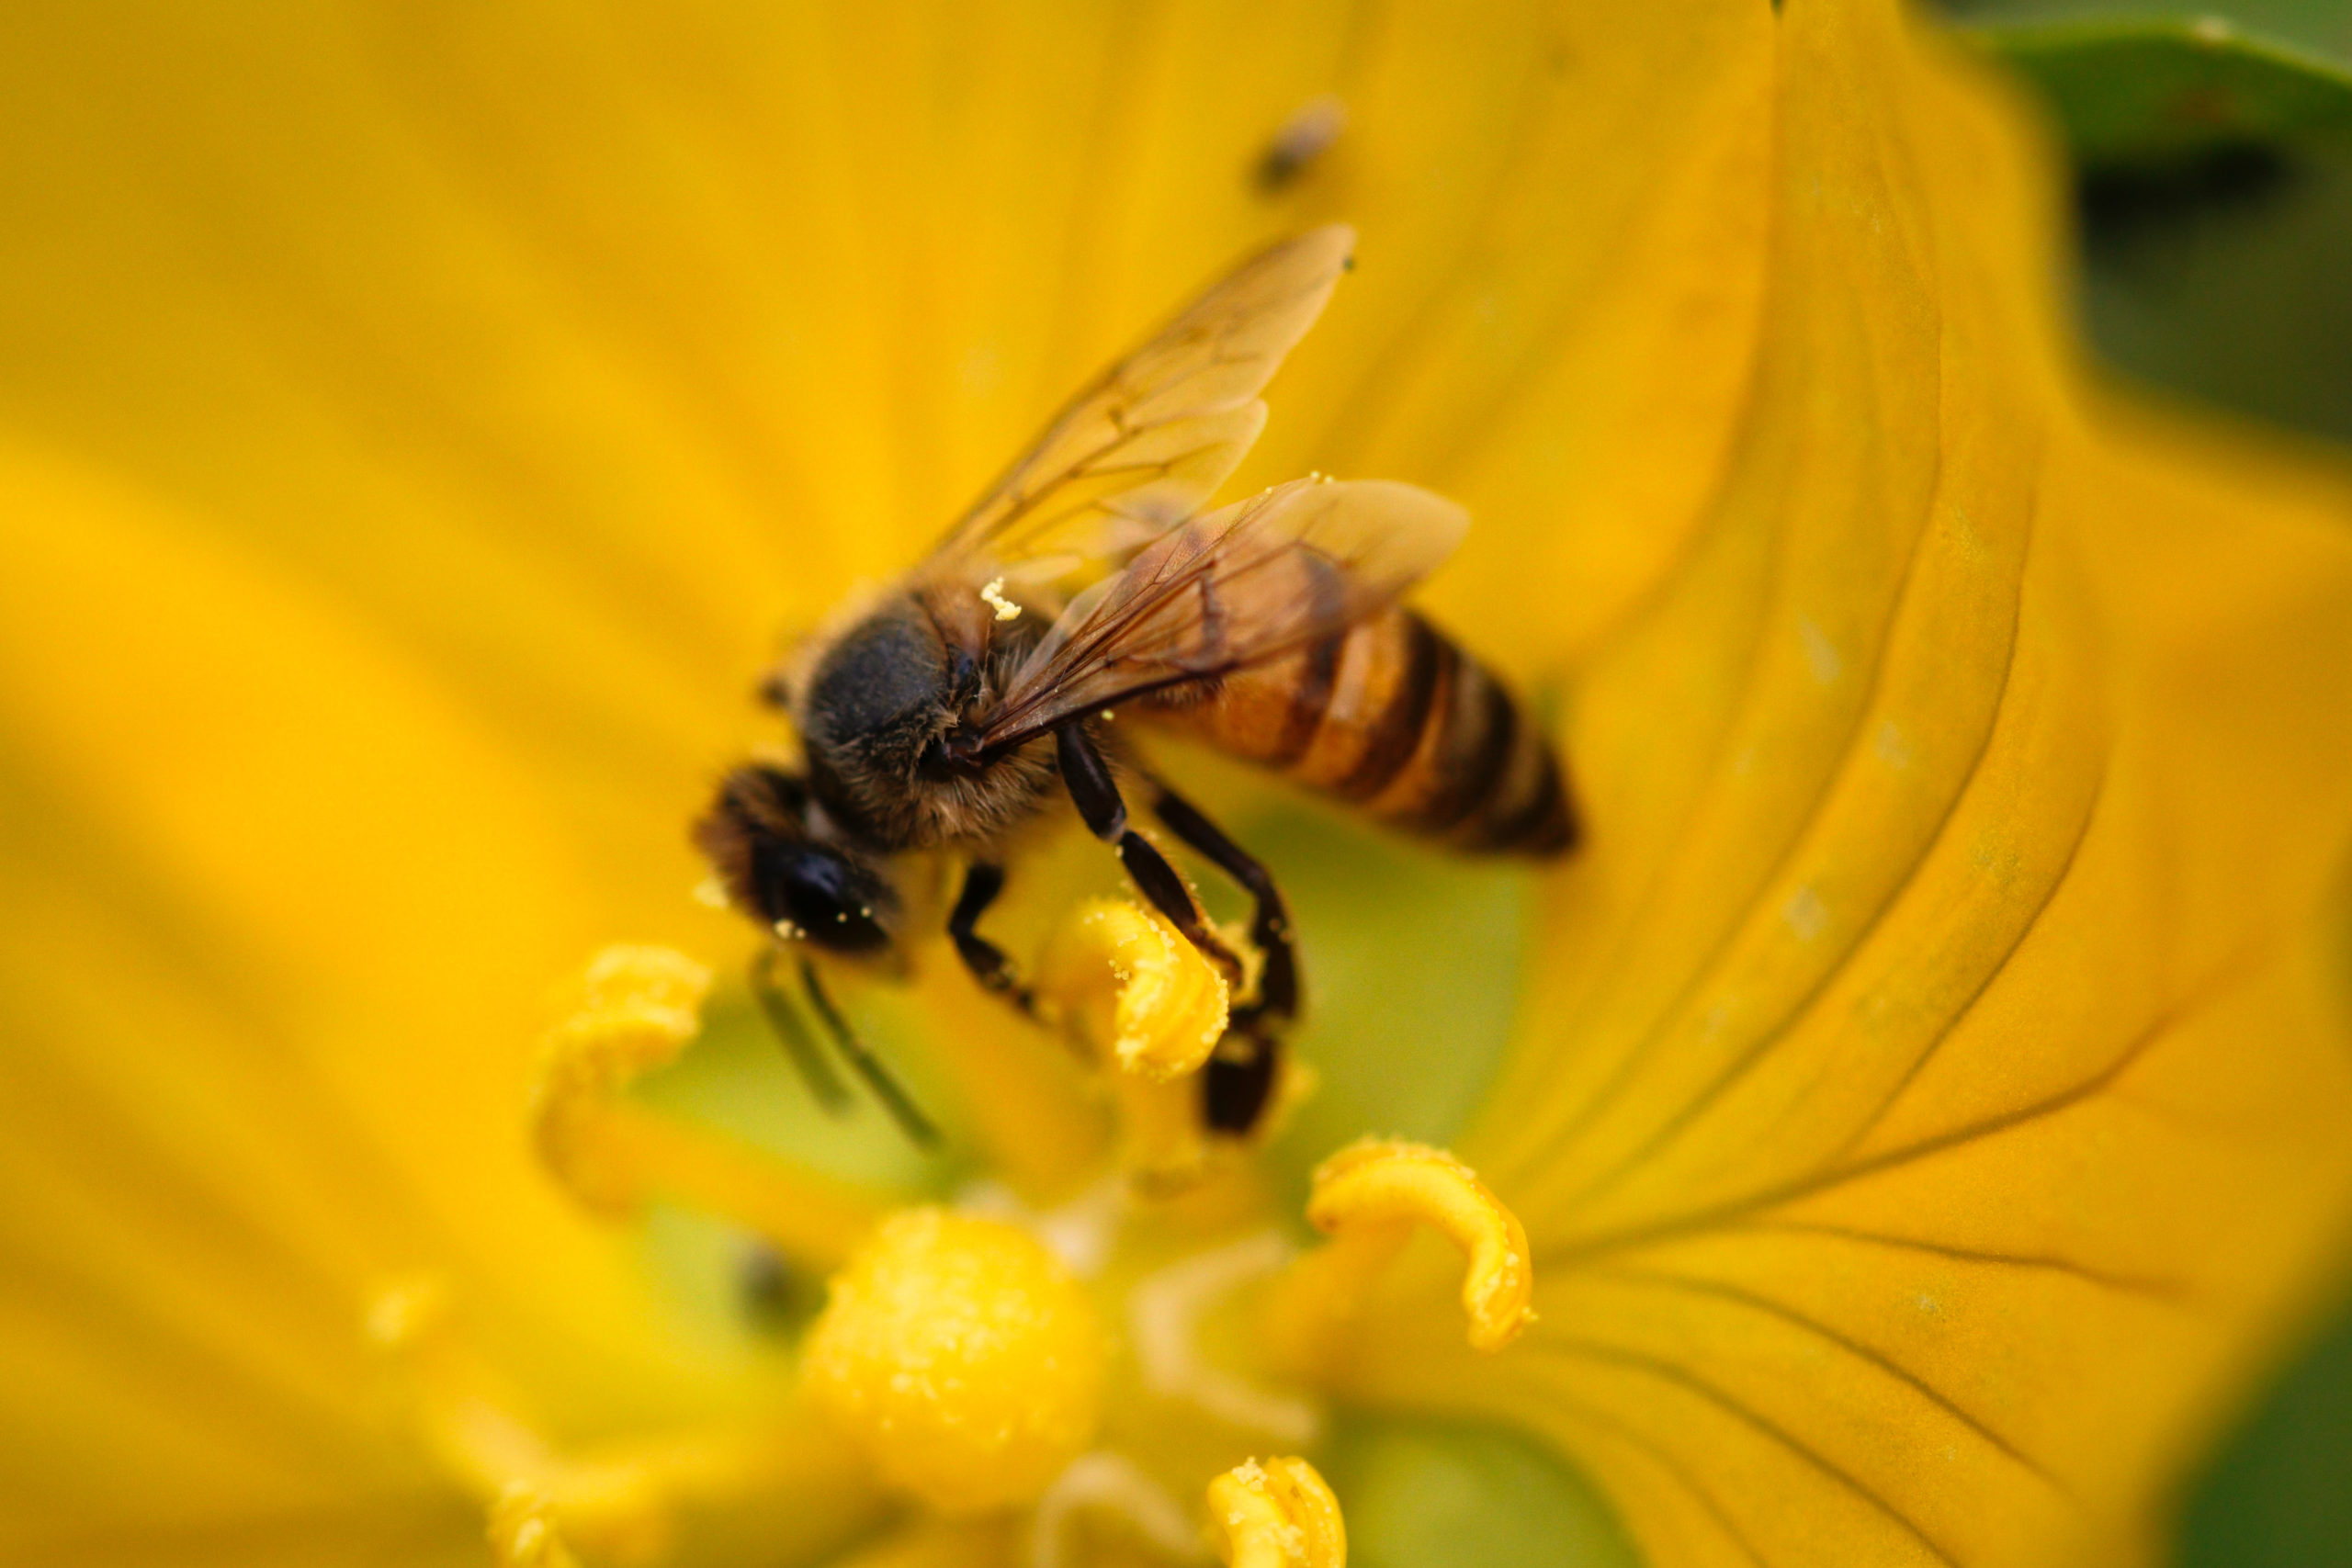 Flores podem 'ouvir' o zumbido de abelhas — e deixar seu néctar mais doce -  Ecoa